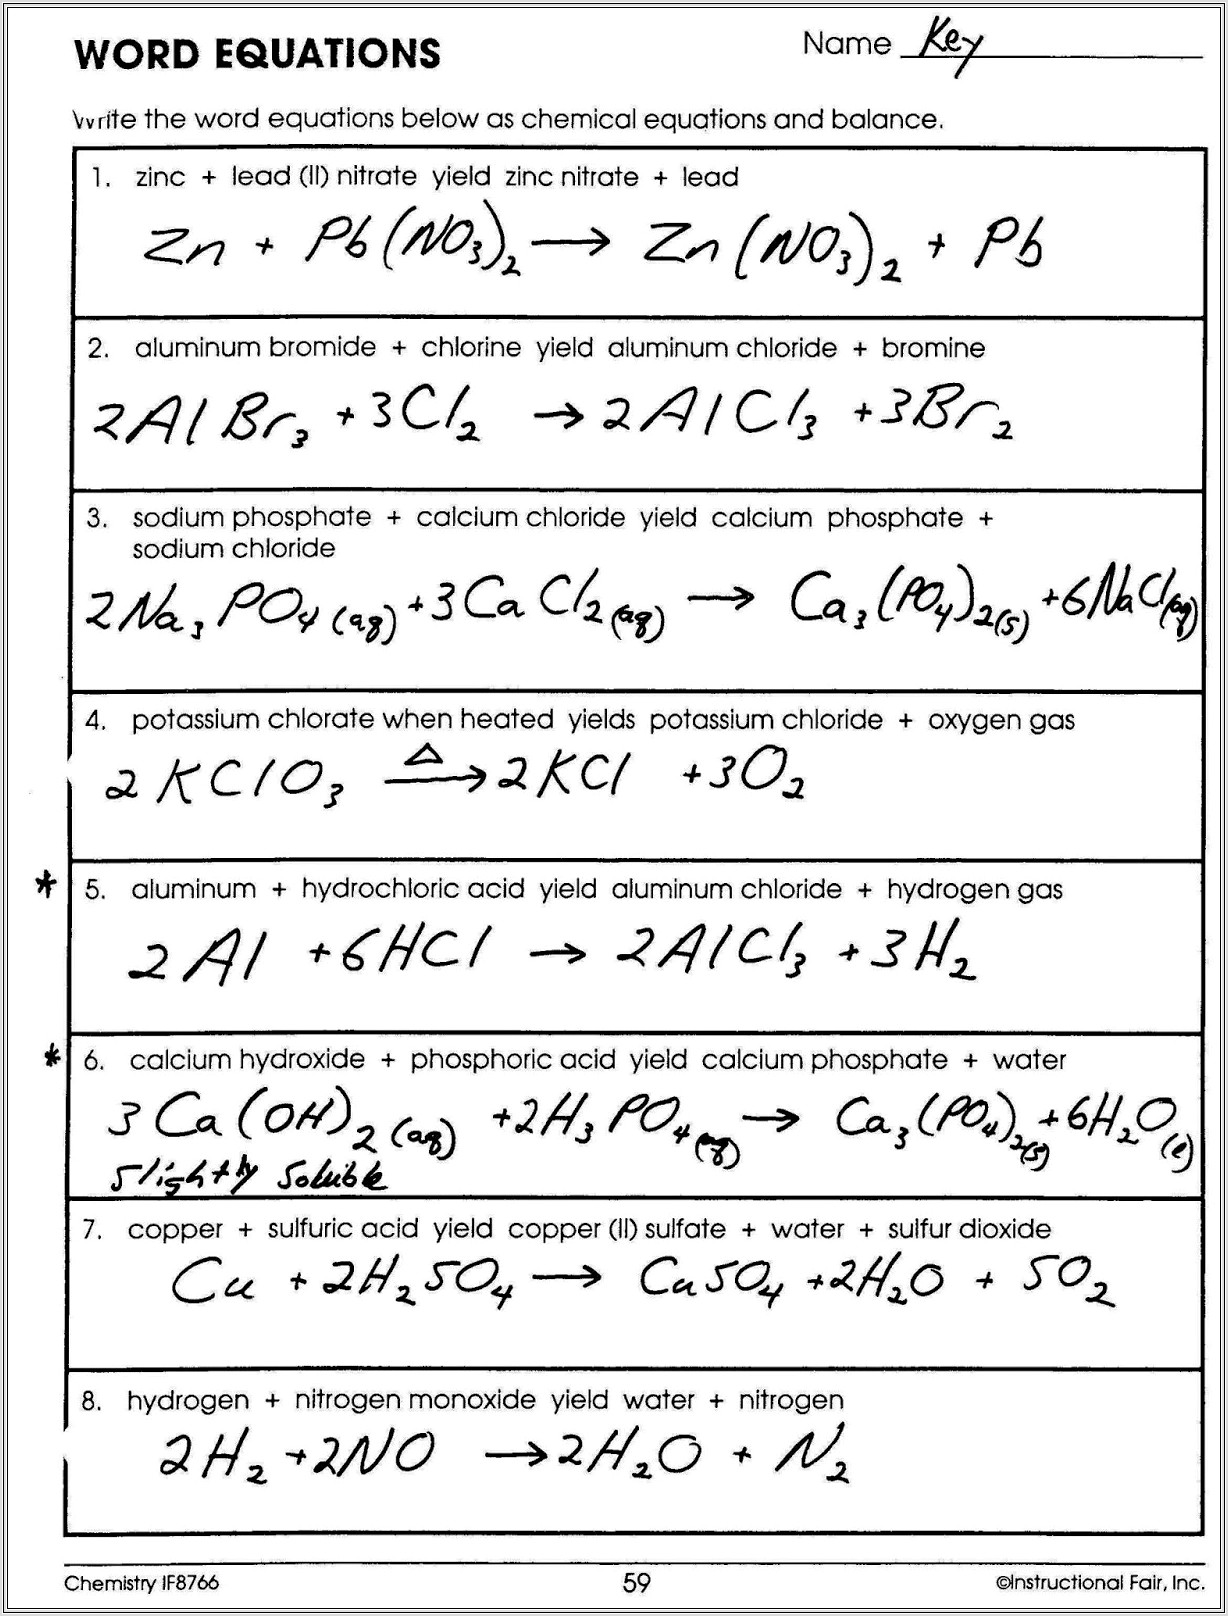 Balancing Word Equations Worksheet Chemistry